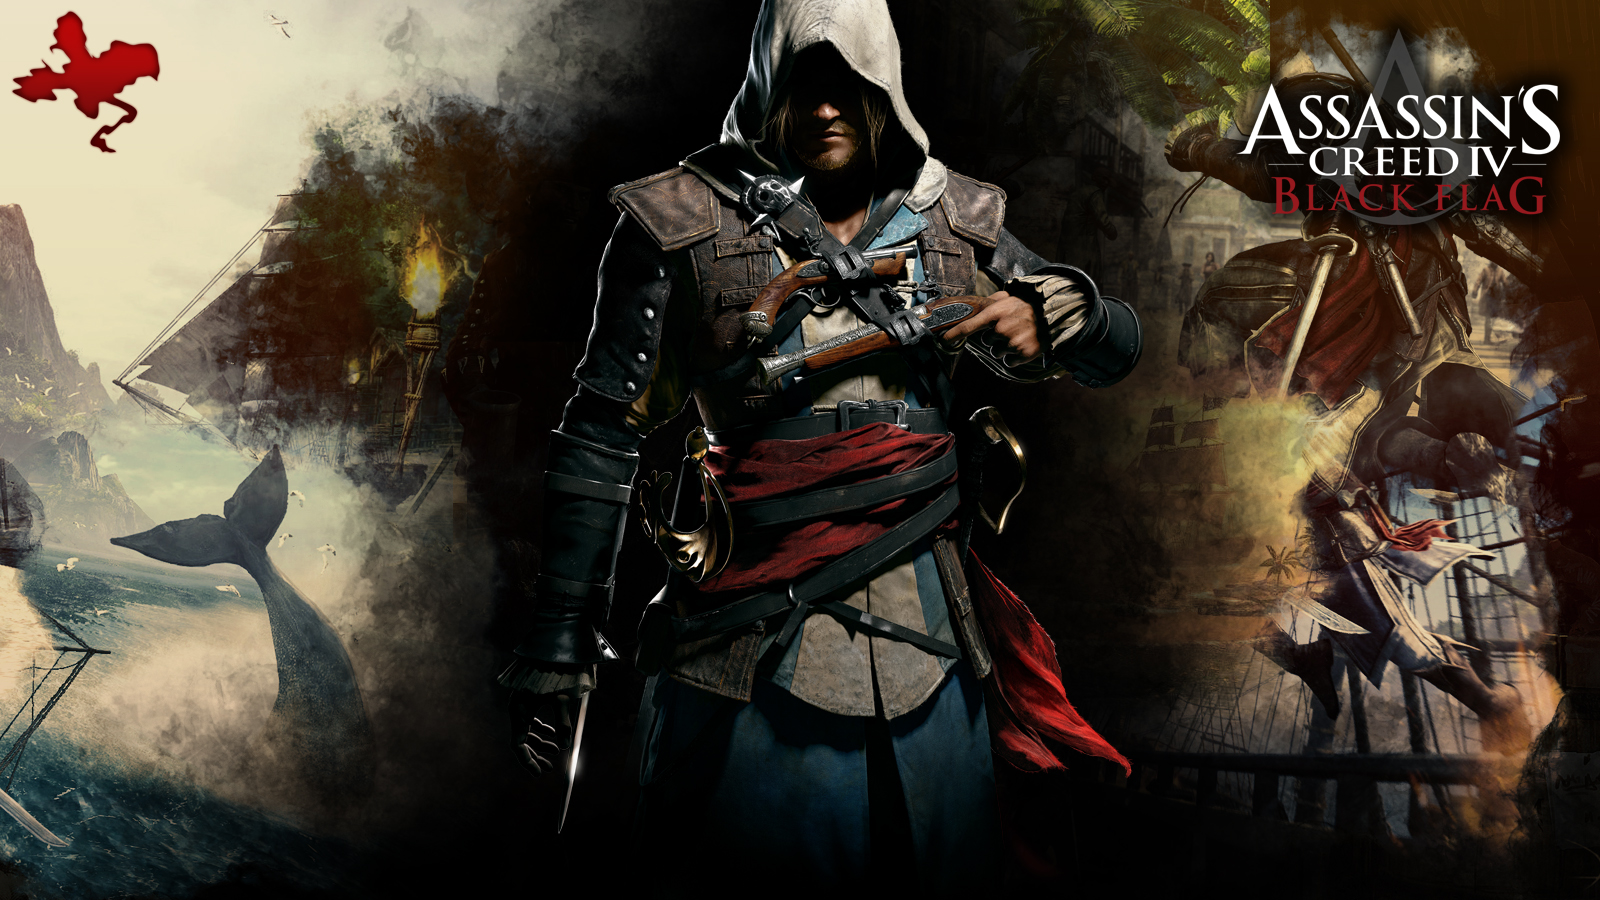 Assassin's Creed 4 Black Flag - The Assassin's Wallpaper (35775646) - Fanpop